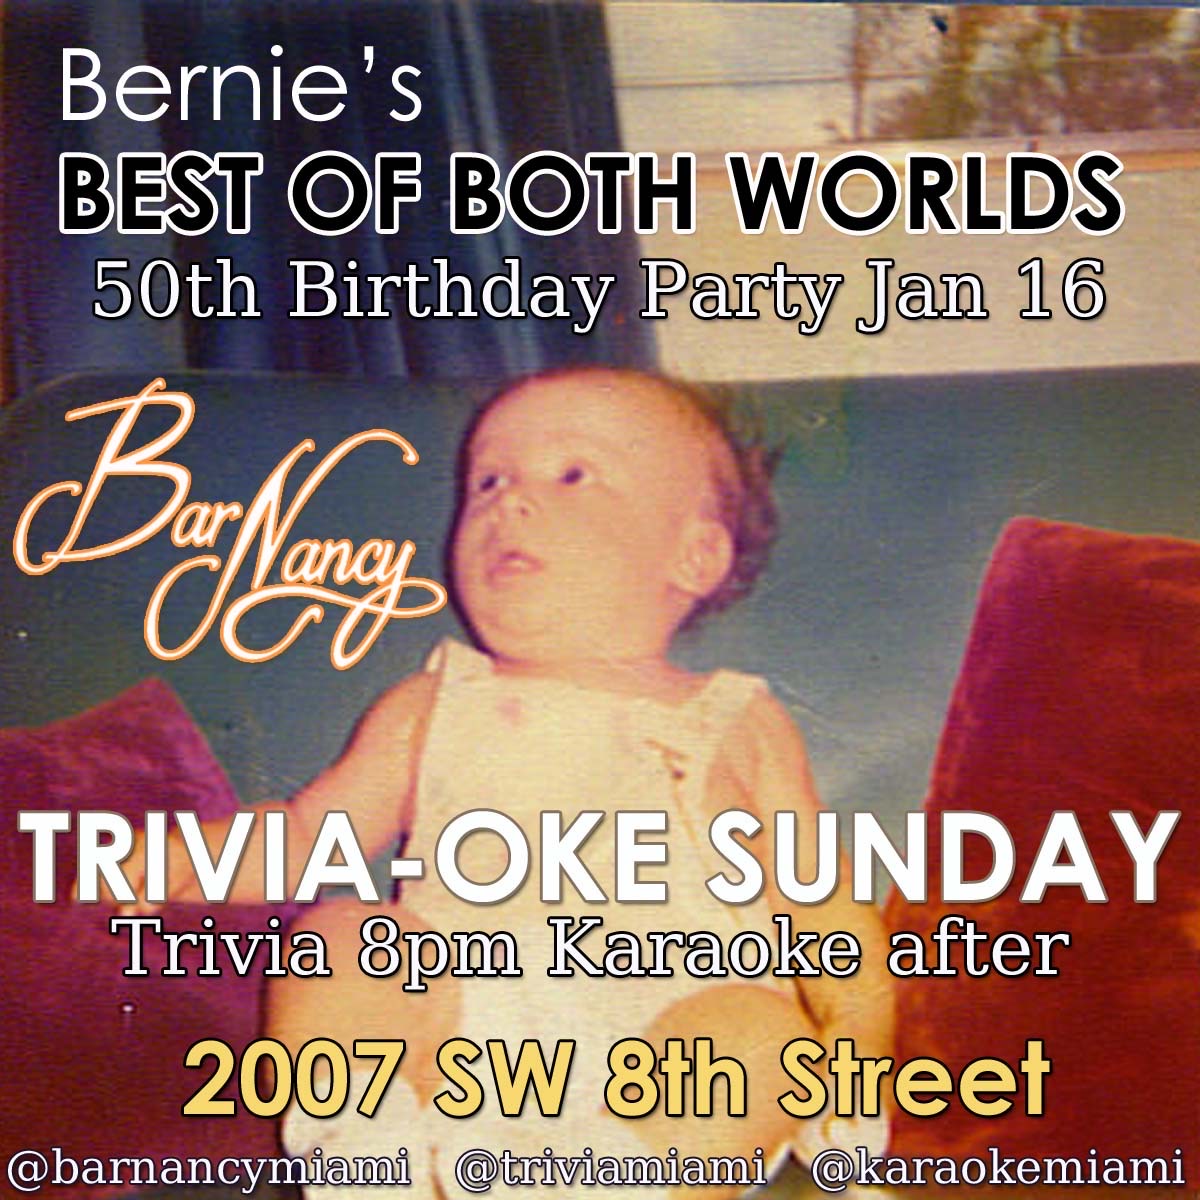 Bernie's 50's Birthday Party and Trivia - Oke Sunday at Bar Nancy Jan 16th